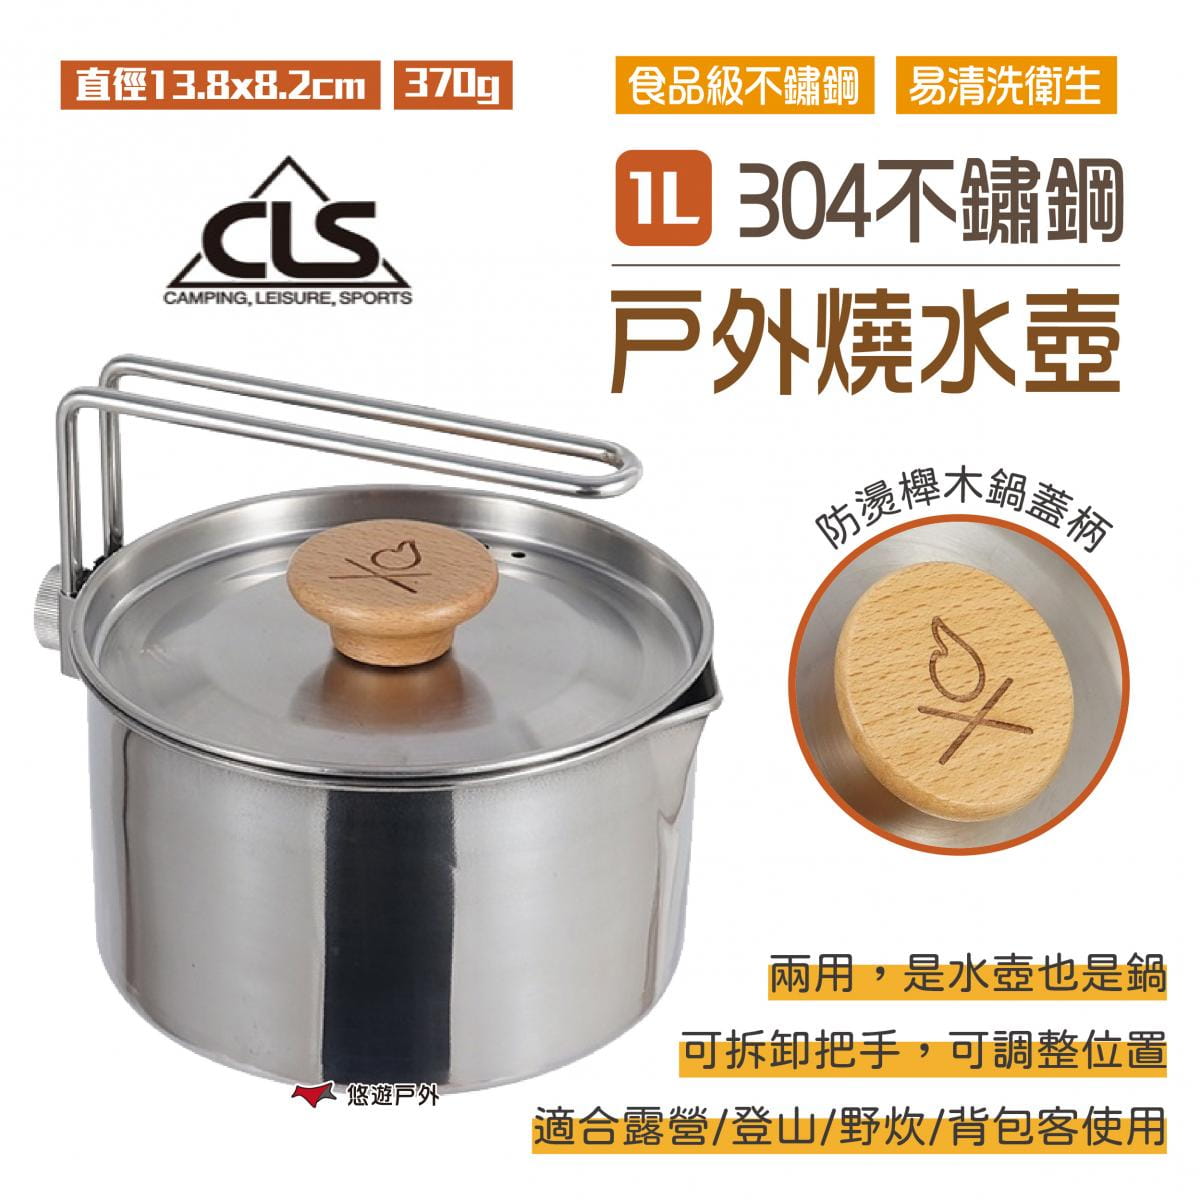 【CLS】304不鏽鋼戶外燒水壺1L (悠遊戶外) 0